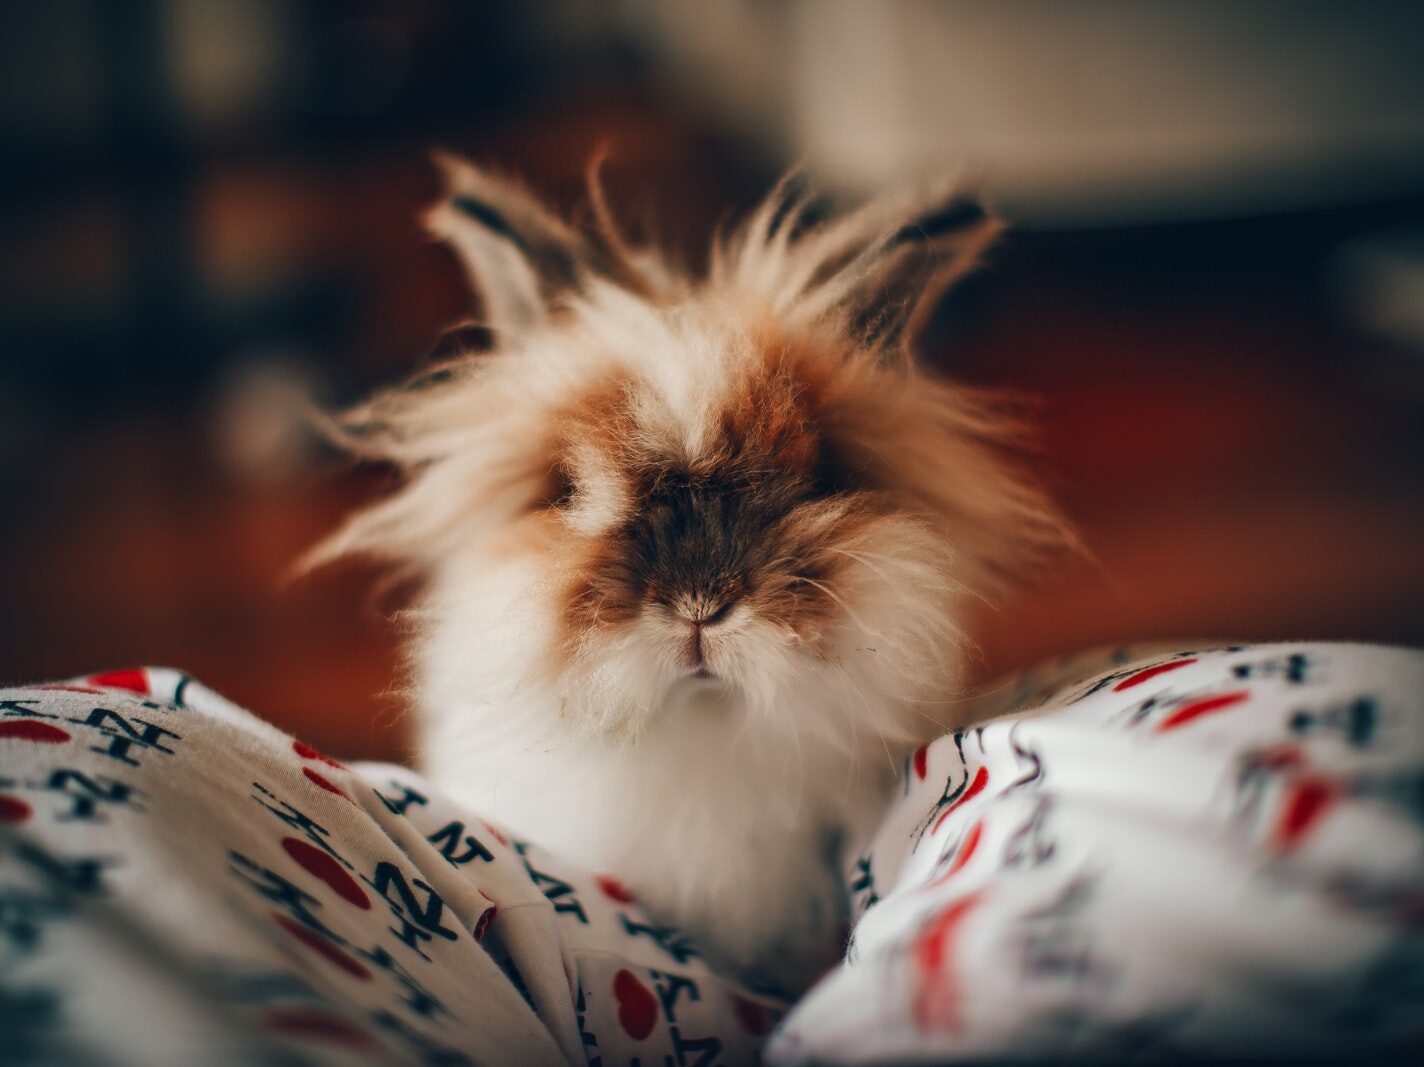 Selective Focus Photo of Cute Rabbit